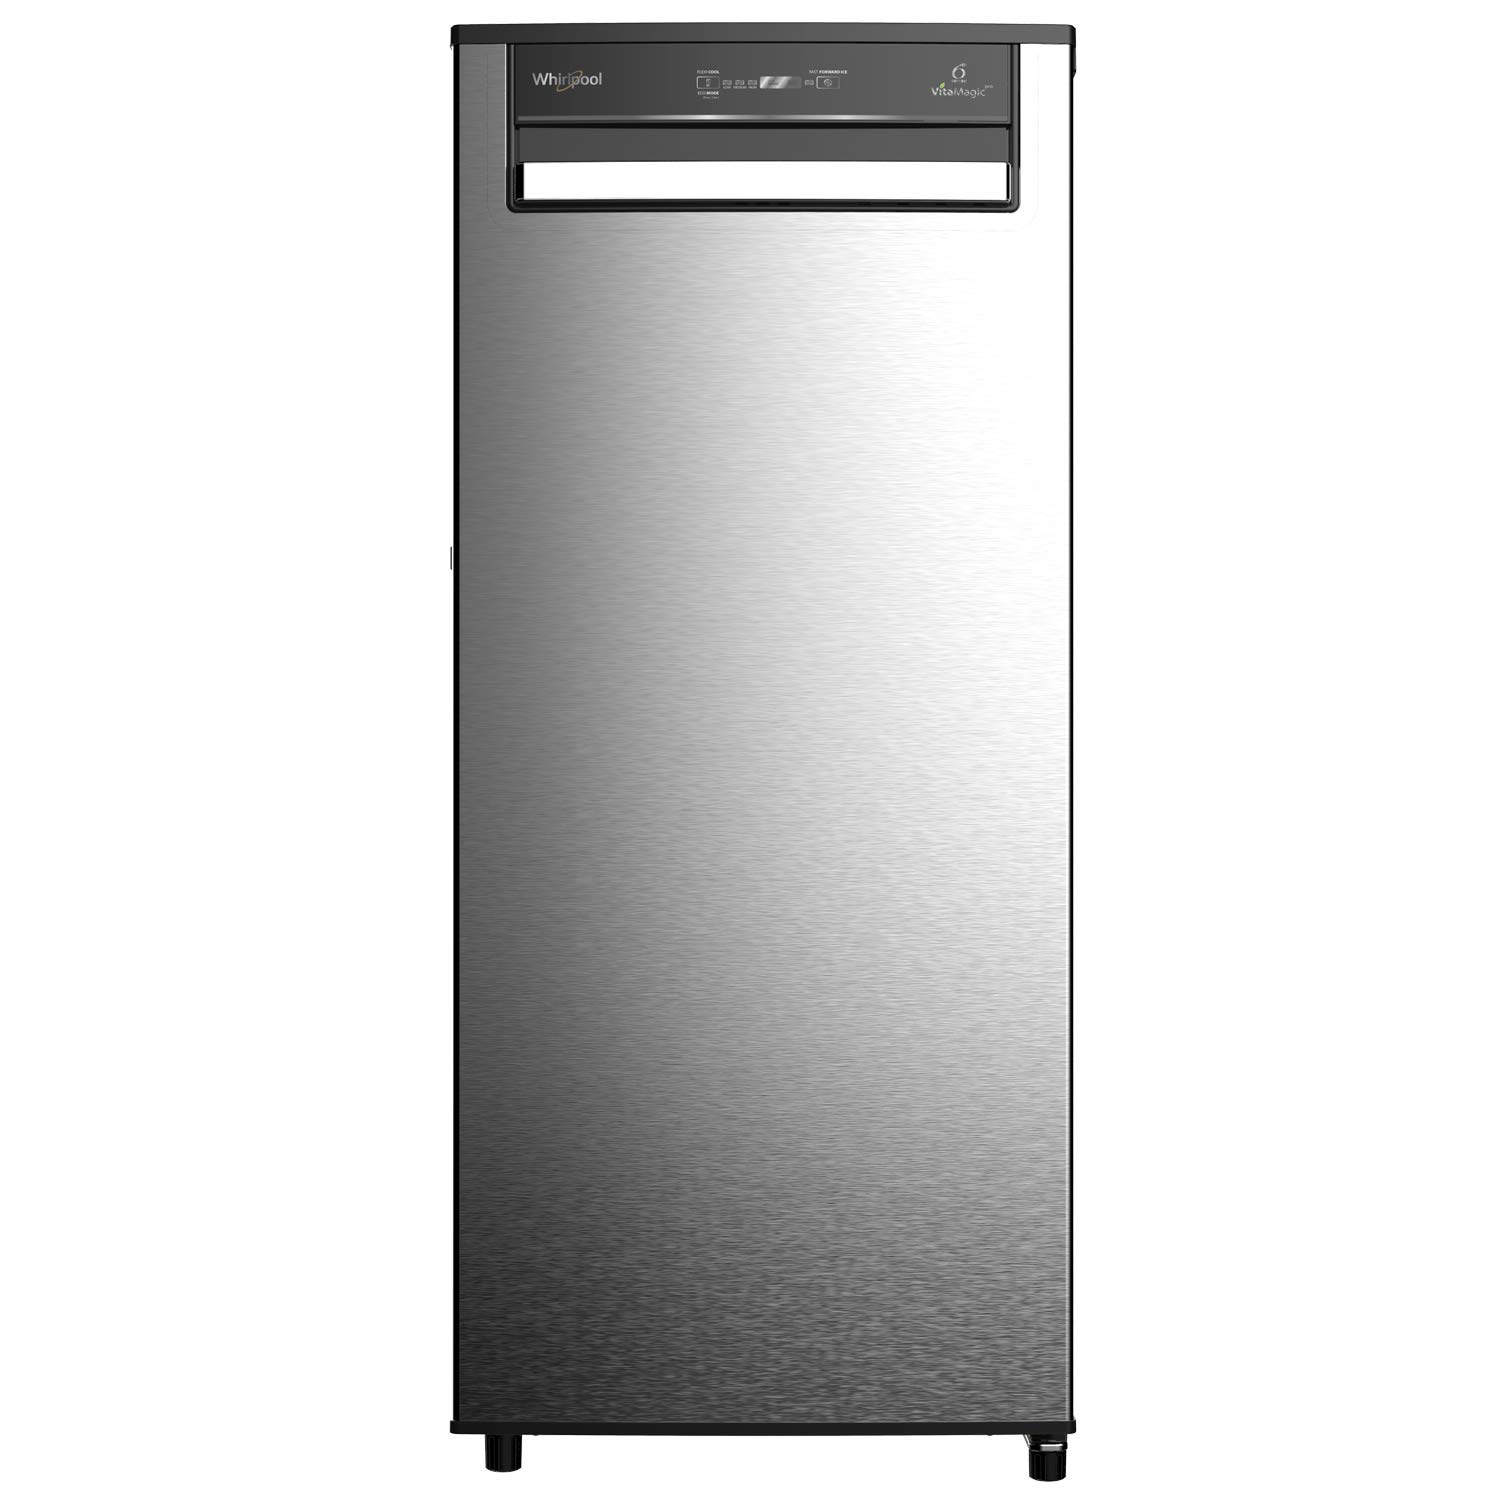 Whirlpool 200 L 3 Star Direct-Cool Single Door Refrigerator